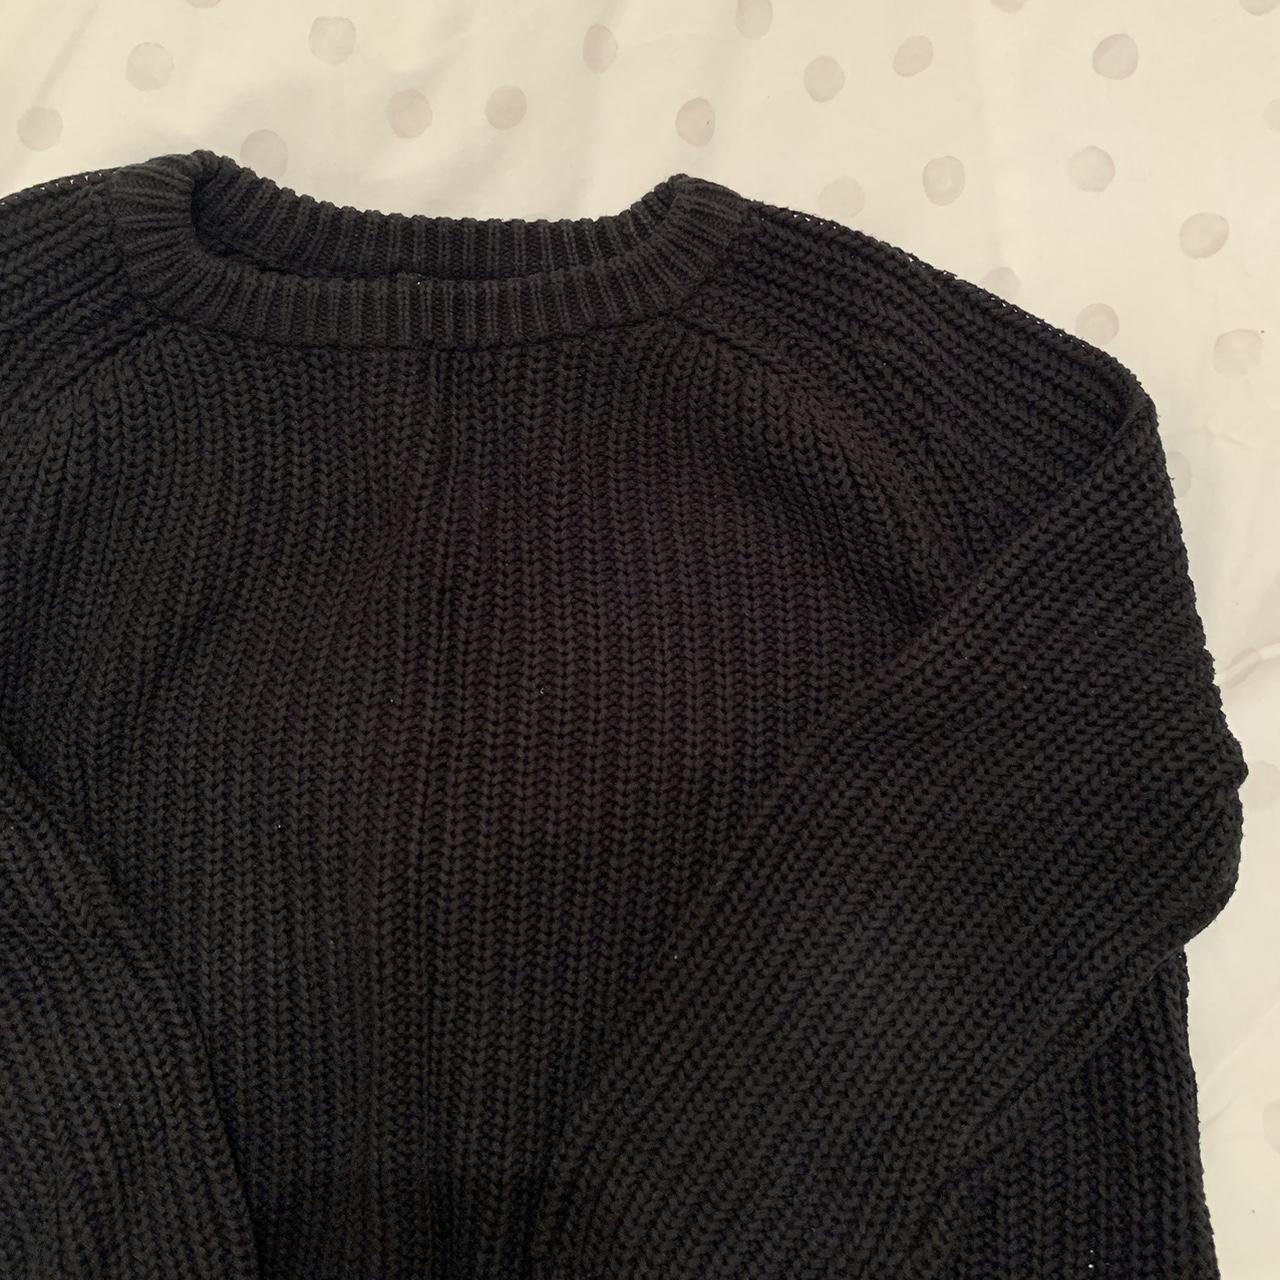 American Apparel Black knit jumper Cropped Perfect... - Depop